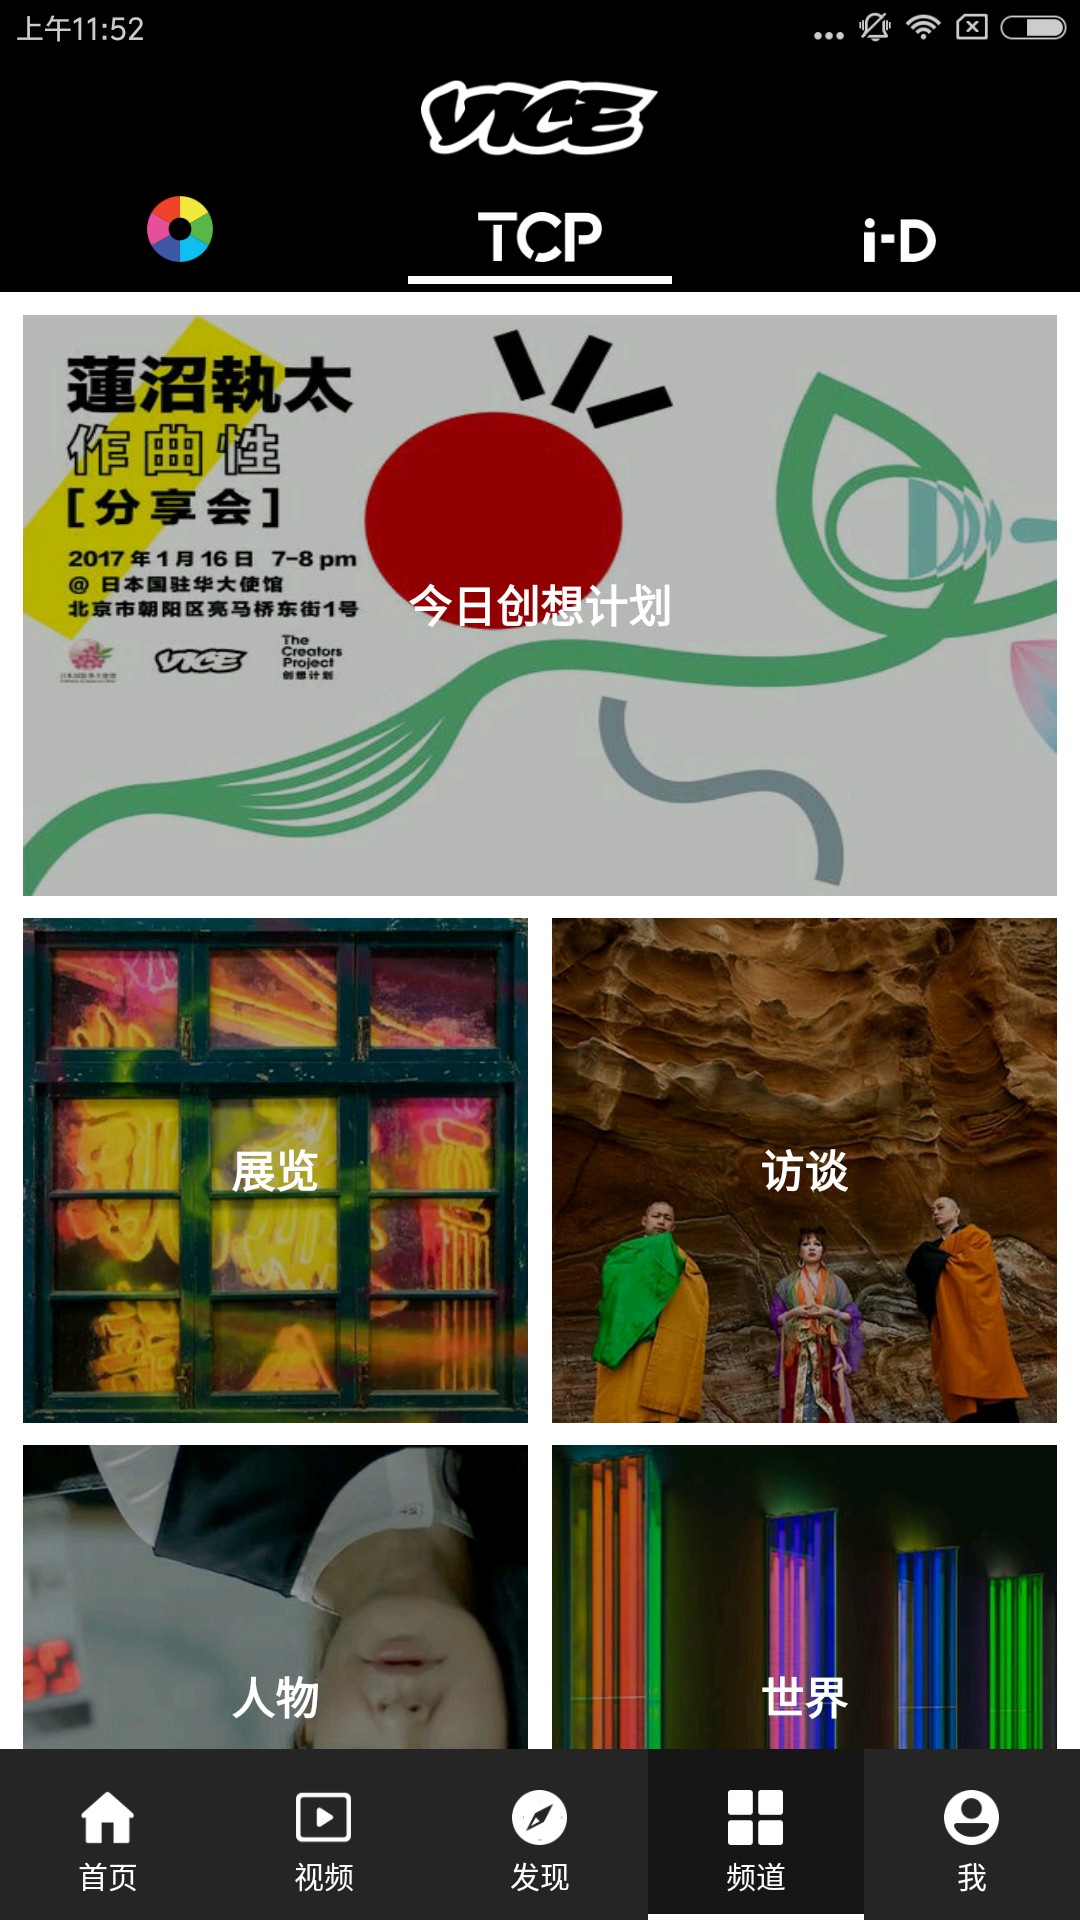 VICE中国苹果版